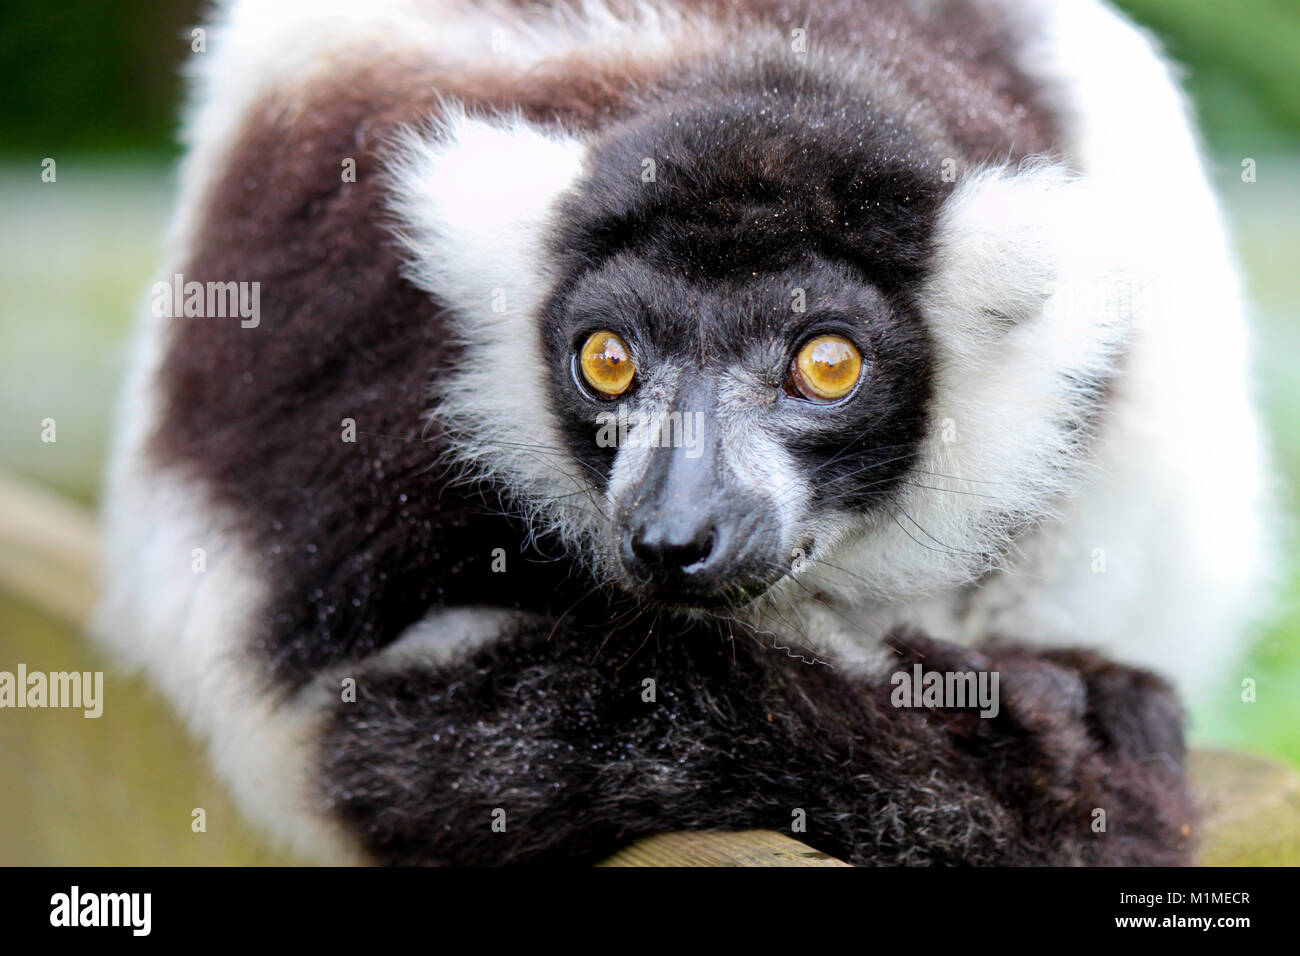 Fluffy monkey with big eyes Stock Photo